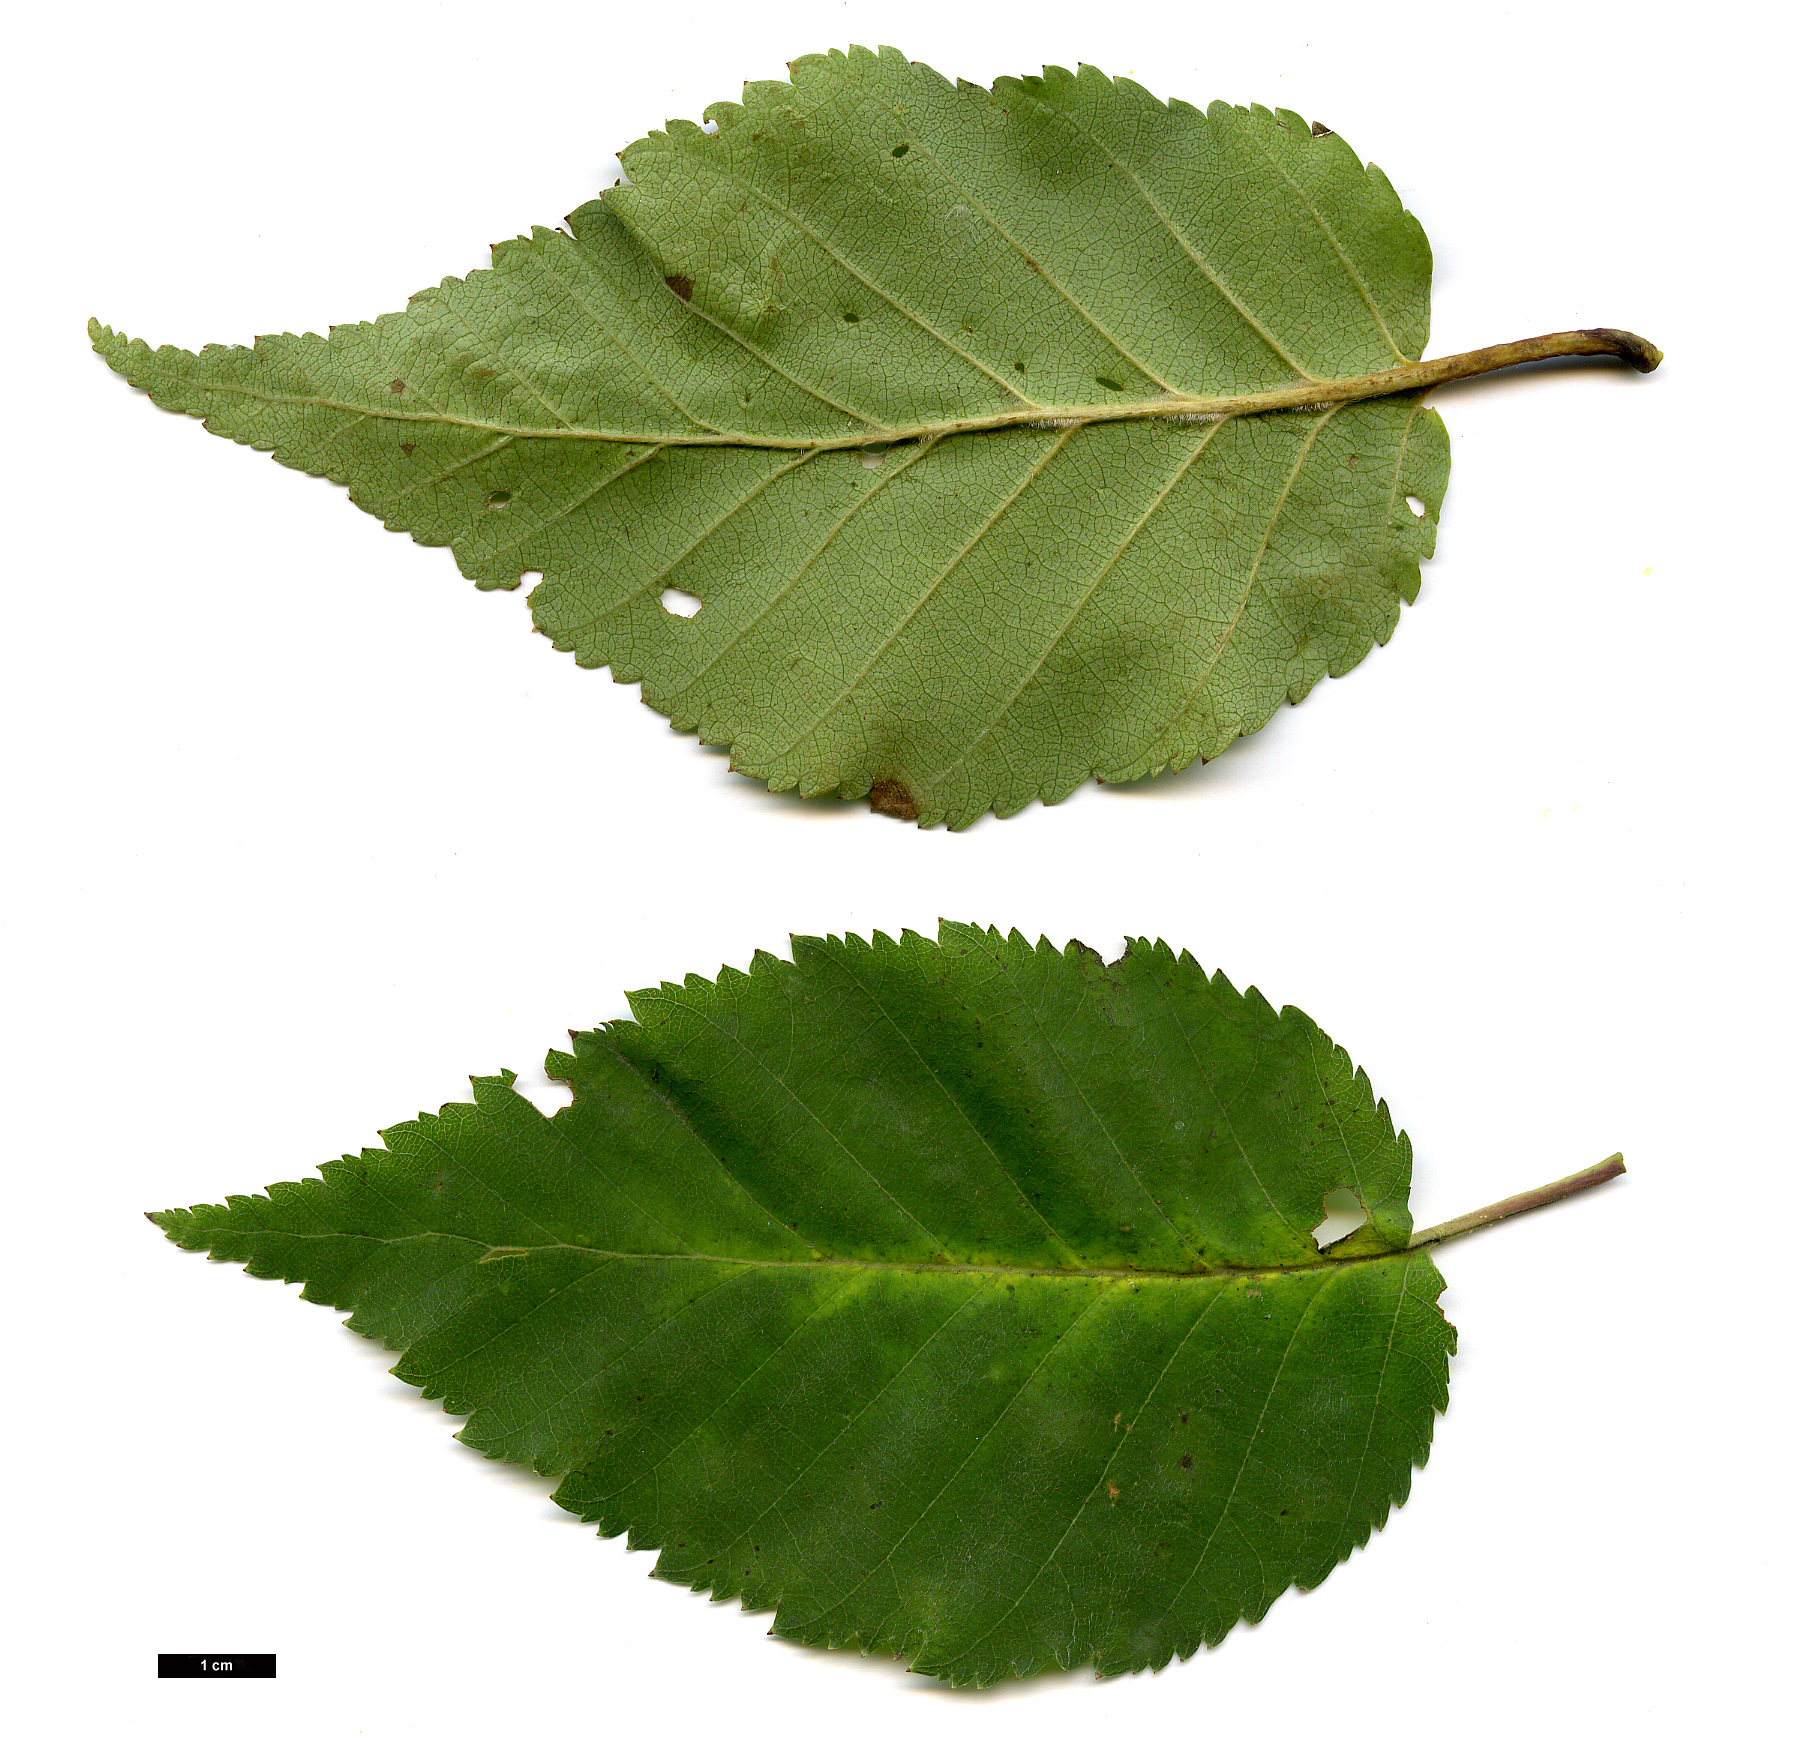 High resolution image: Family: Betulaceae - Genus: Betula - Taxon: utilis - SpeciesSub: subsp. albosinensis